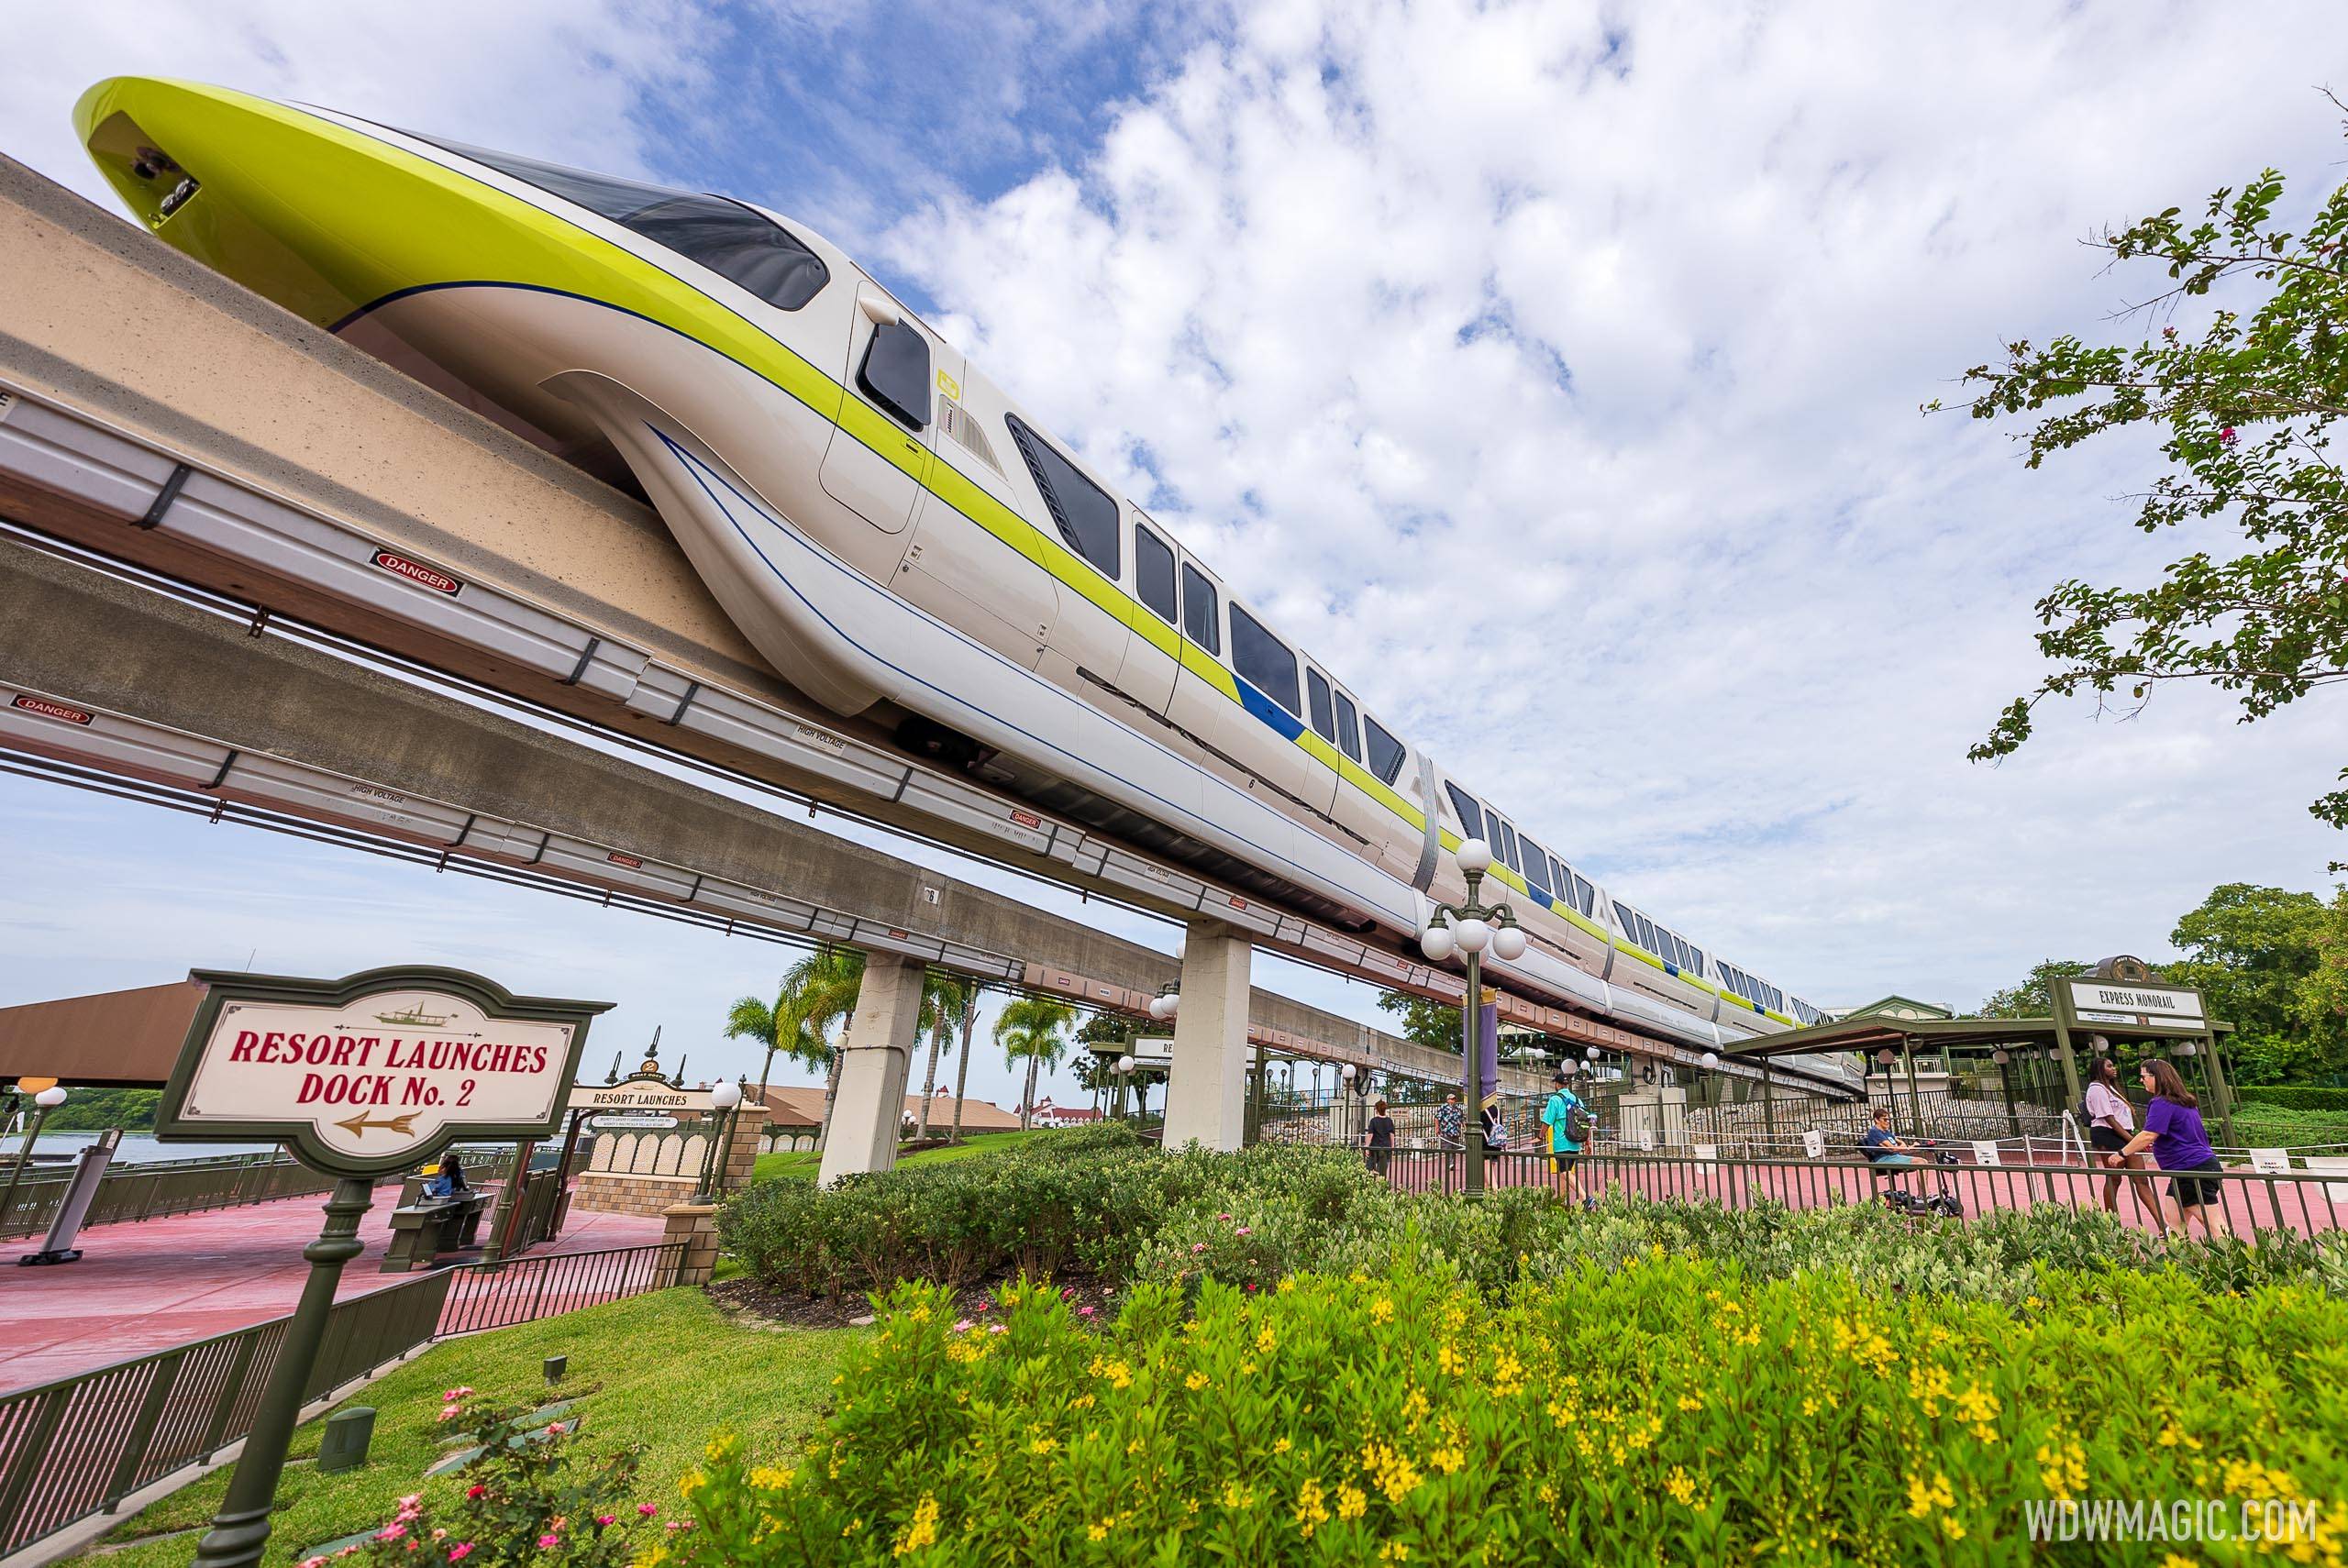 Walt Disney World monorail system returns to service after maintenance work